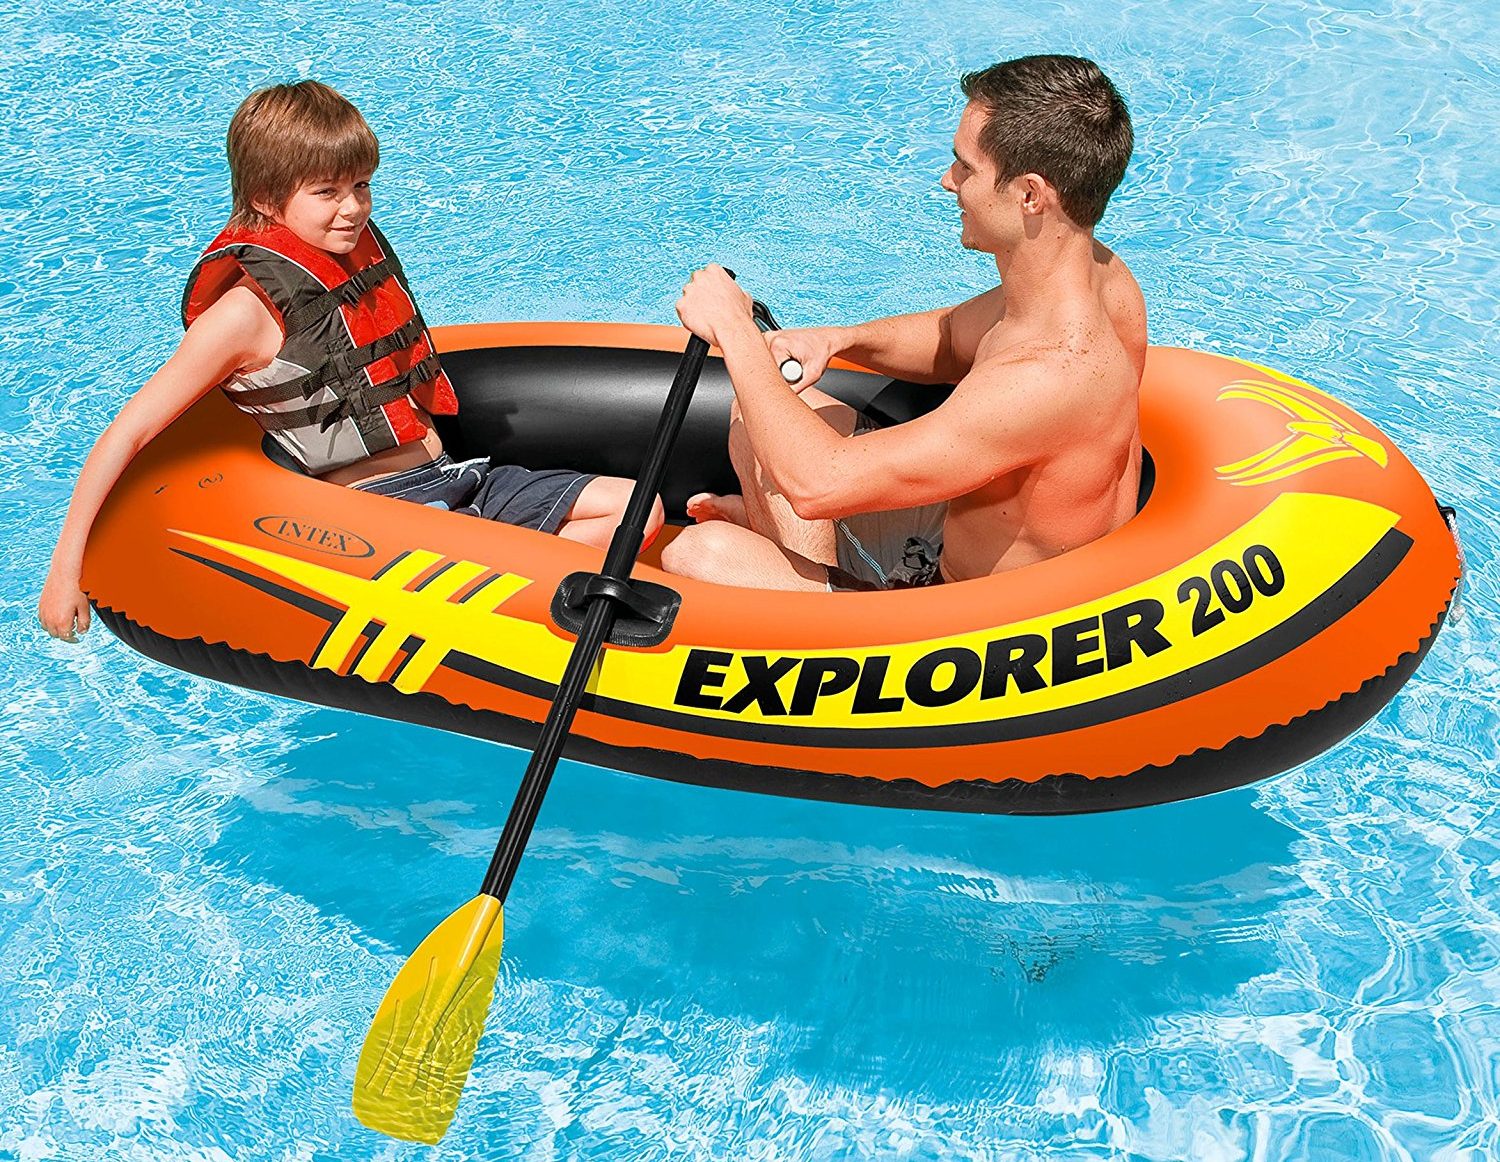 Intex Explorer 200 2-Person Inflatable Raft Just $14.37!